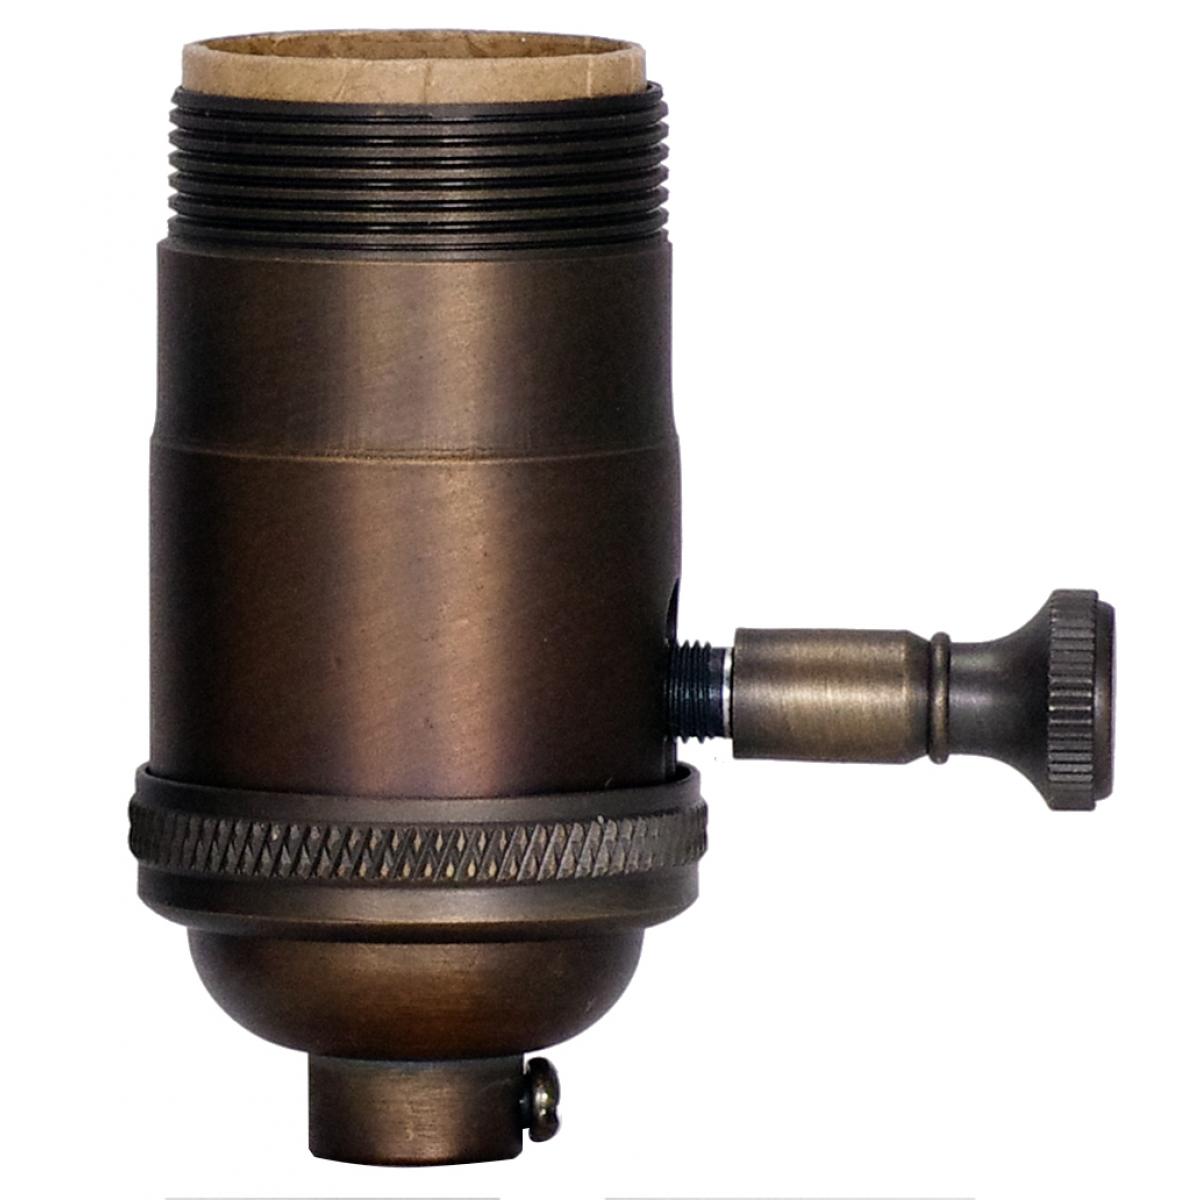 Satco 80-2422 150W Full Range Turn Knob Dimmer Socket w/Uno Thread